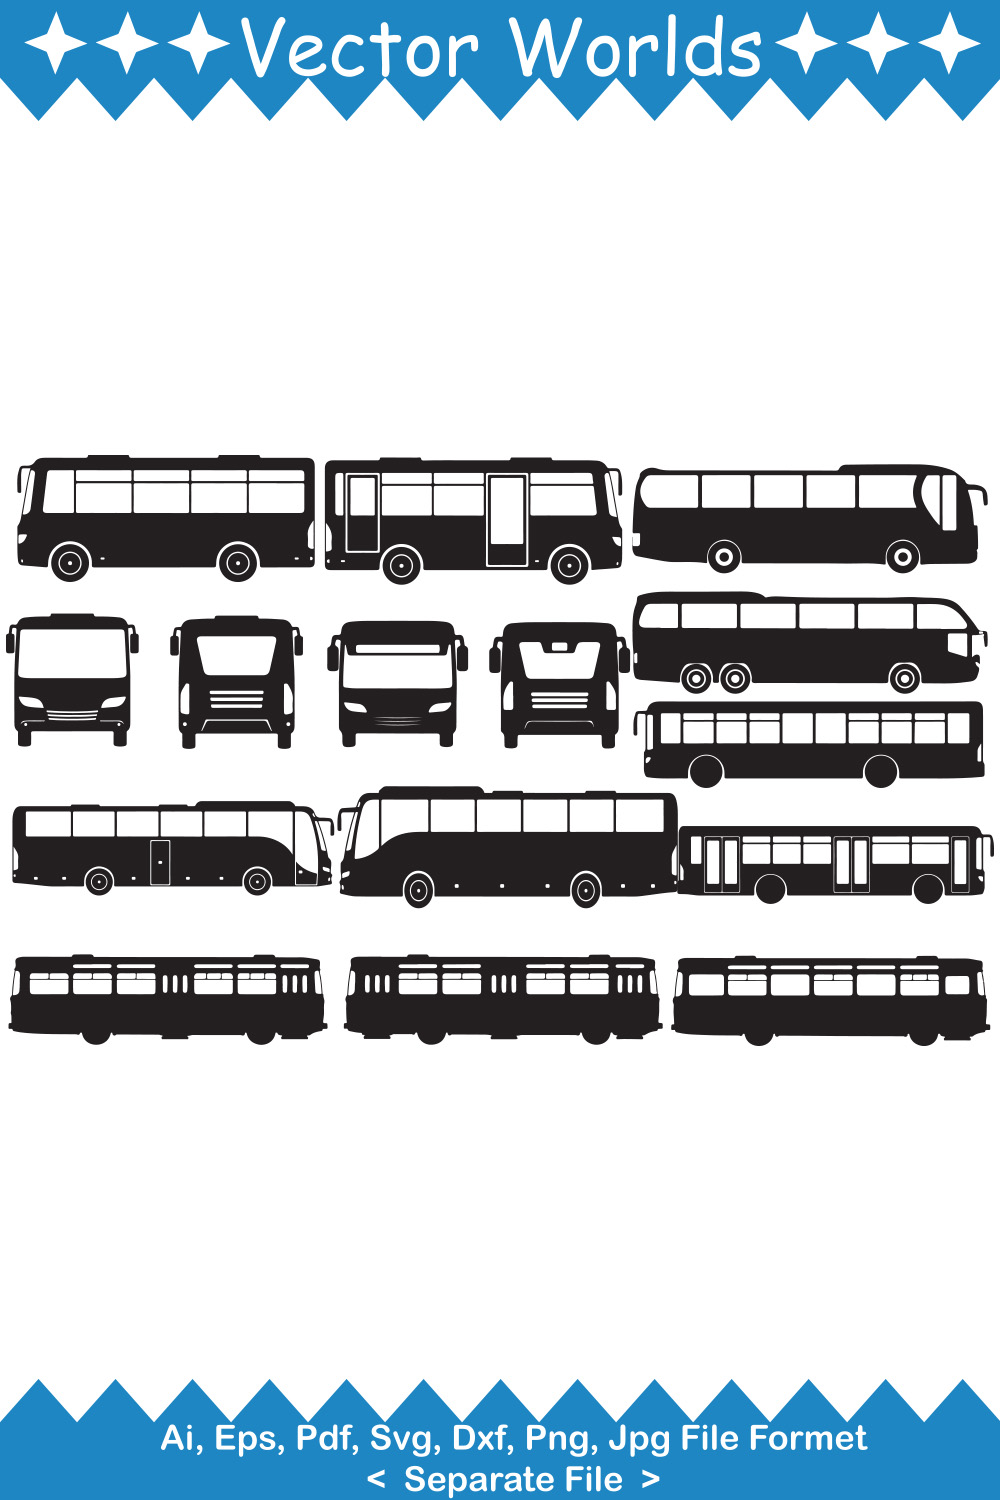 Bundle of vector exquisite bus silhouette images.